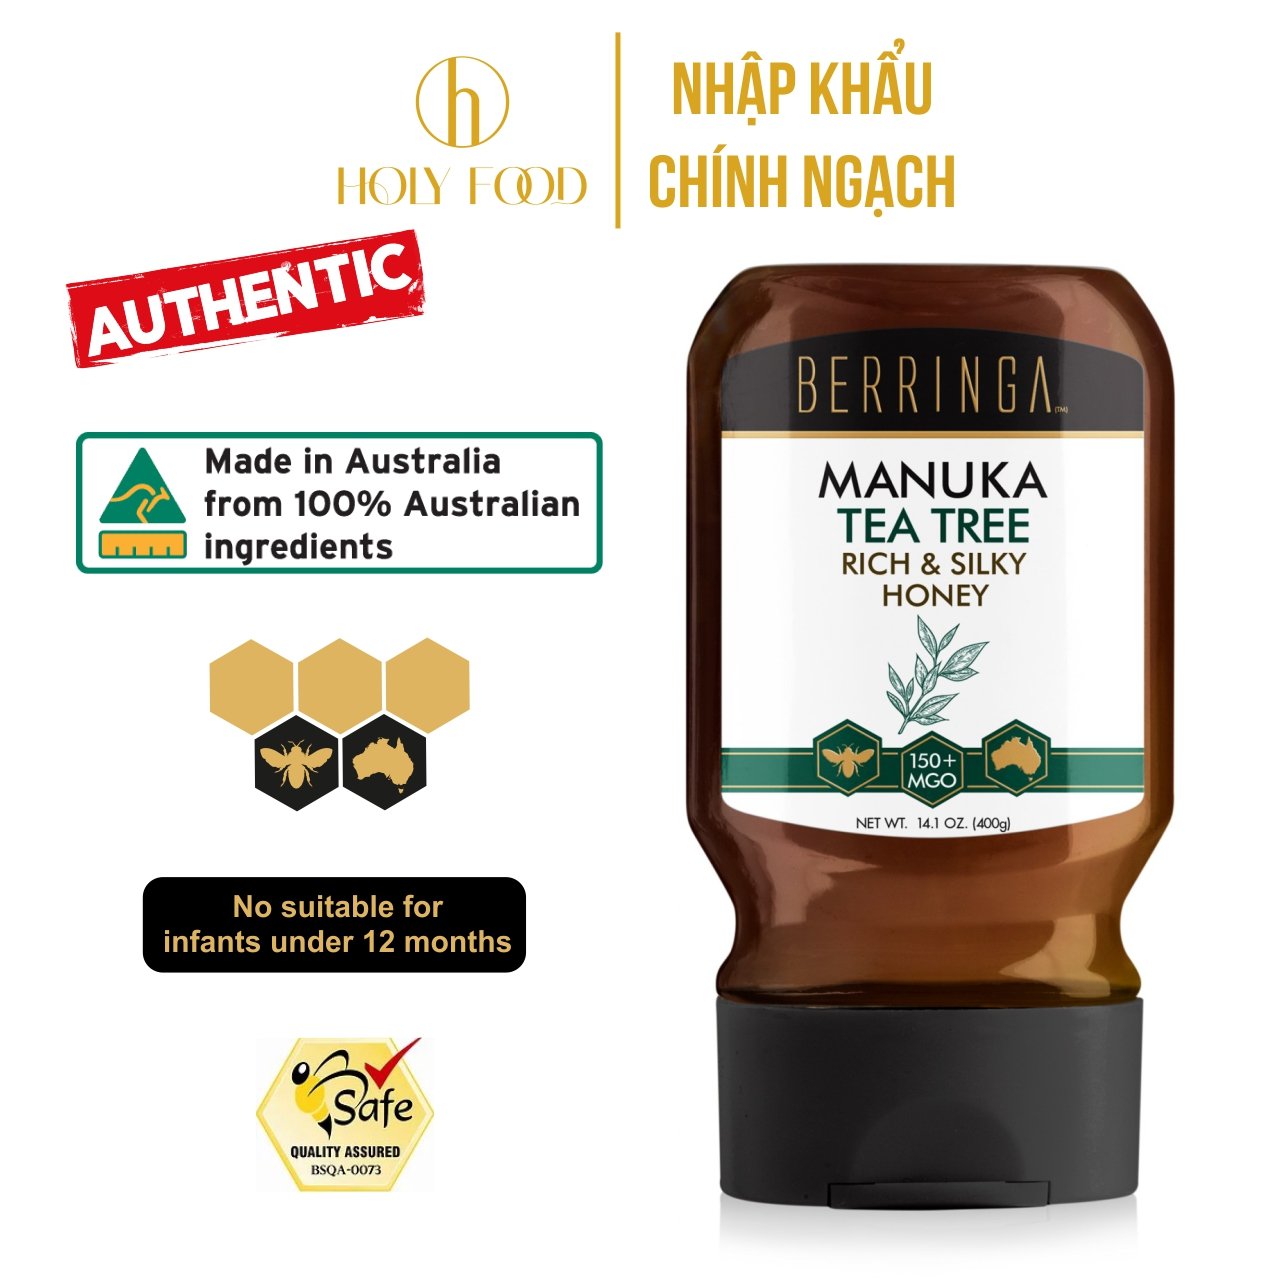 Mật ong Berringa Manuka Tea Tree Rich & Silky Honey MGO 150+, 400gram